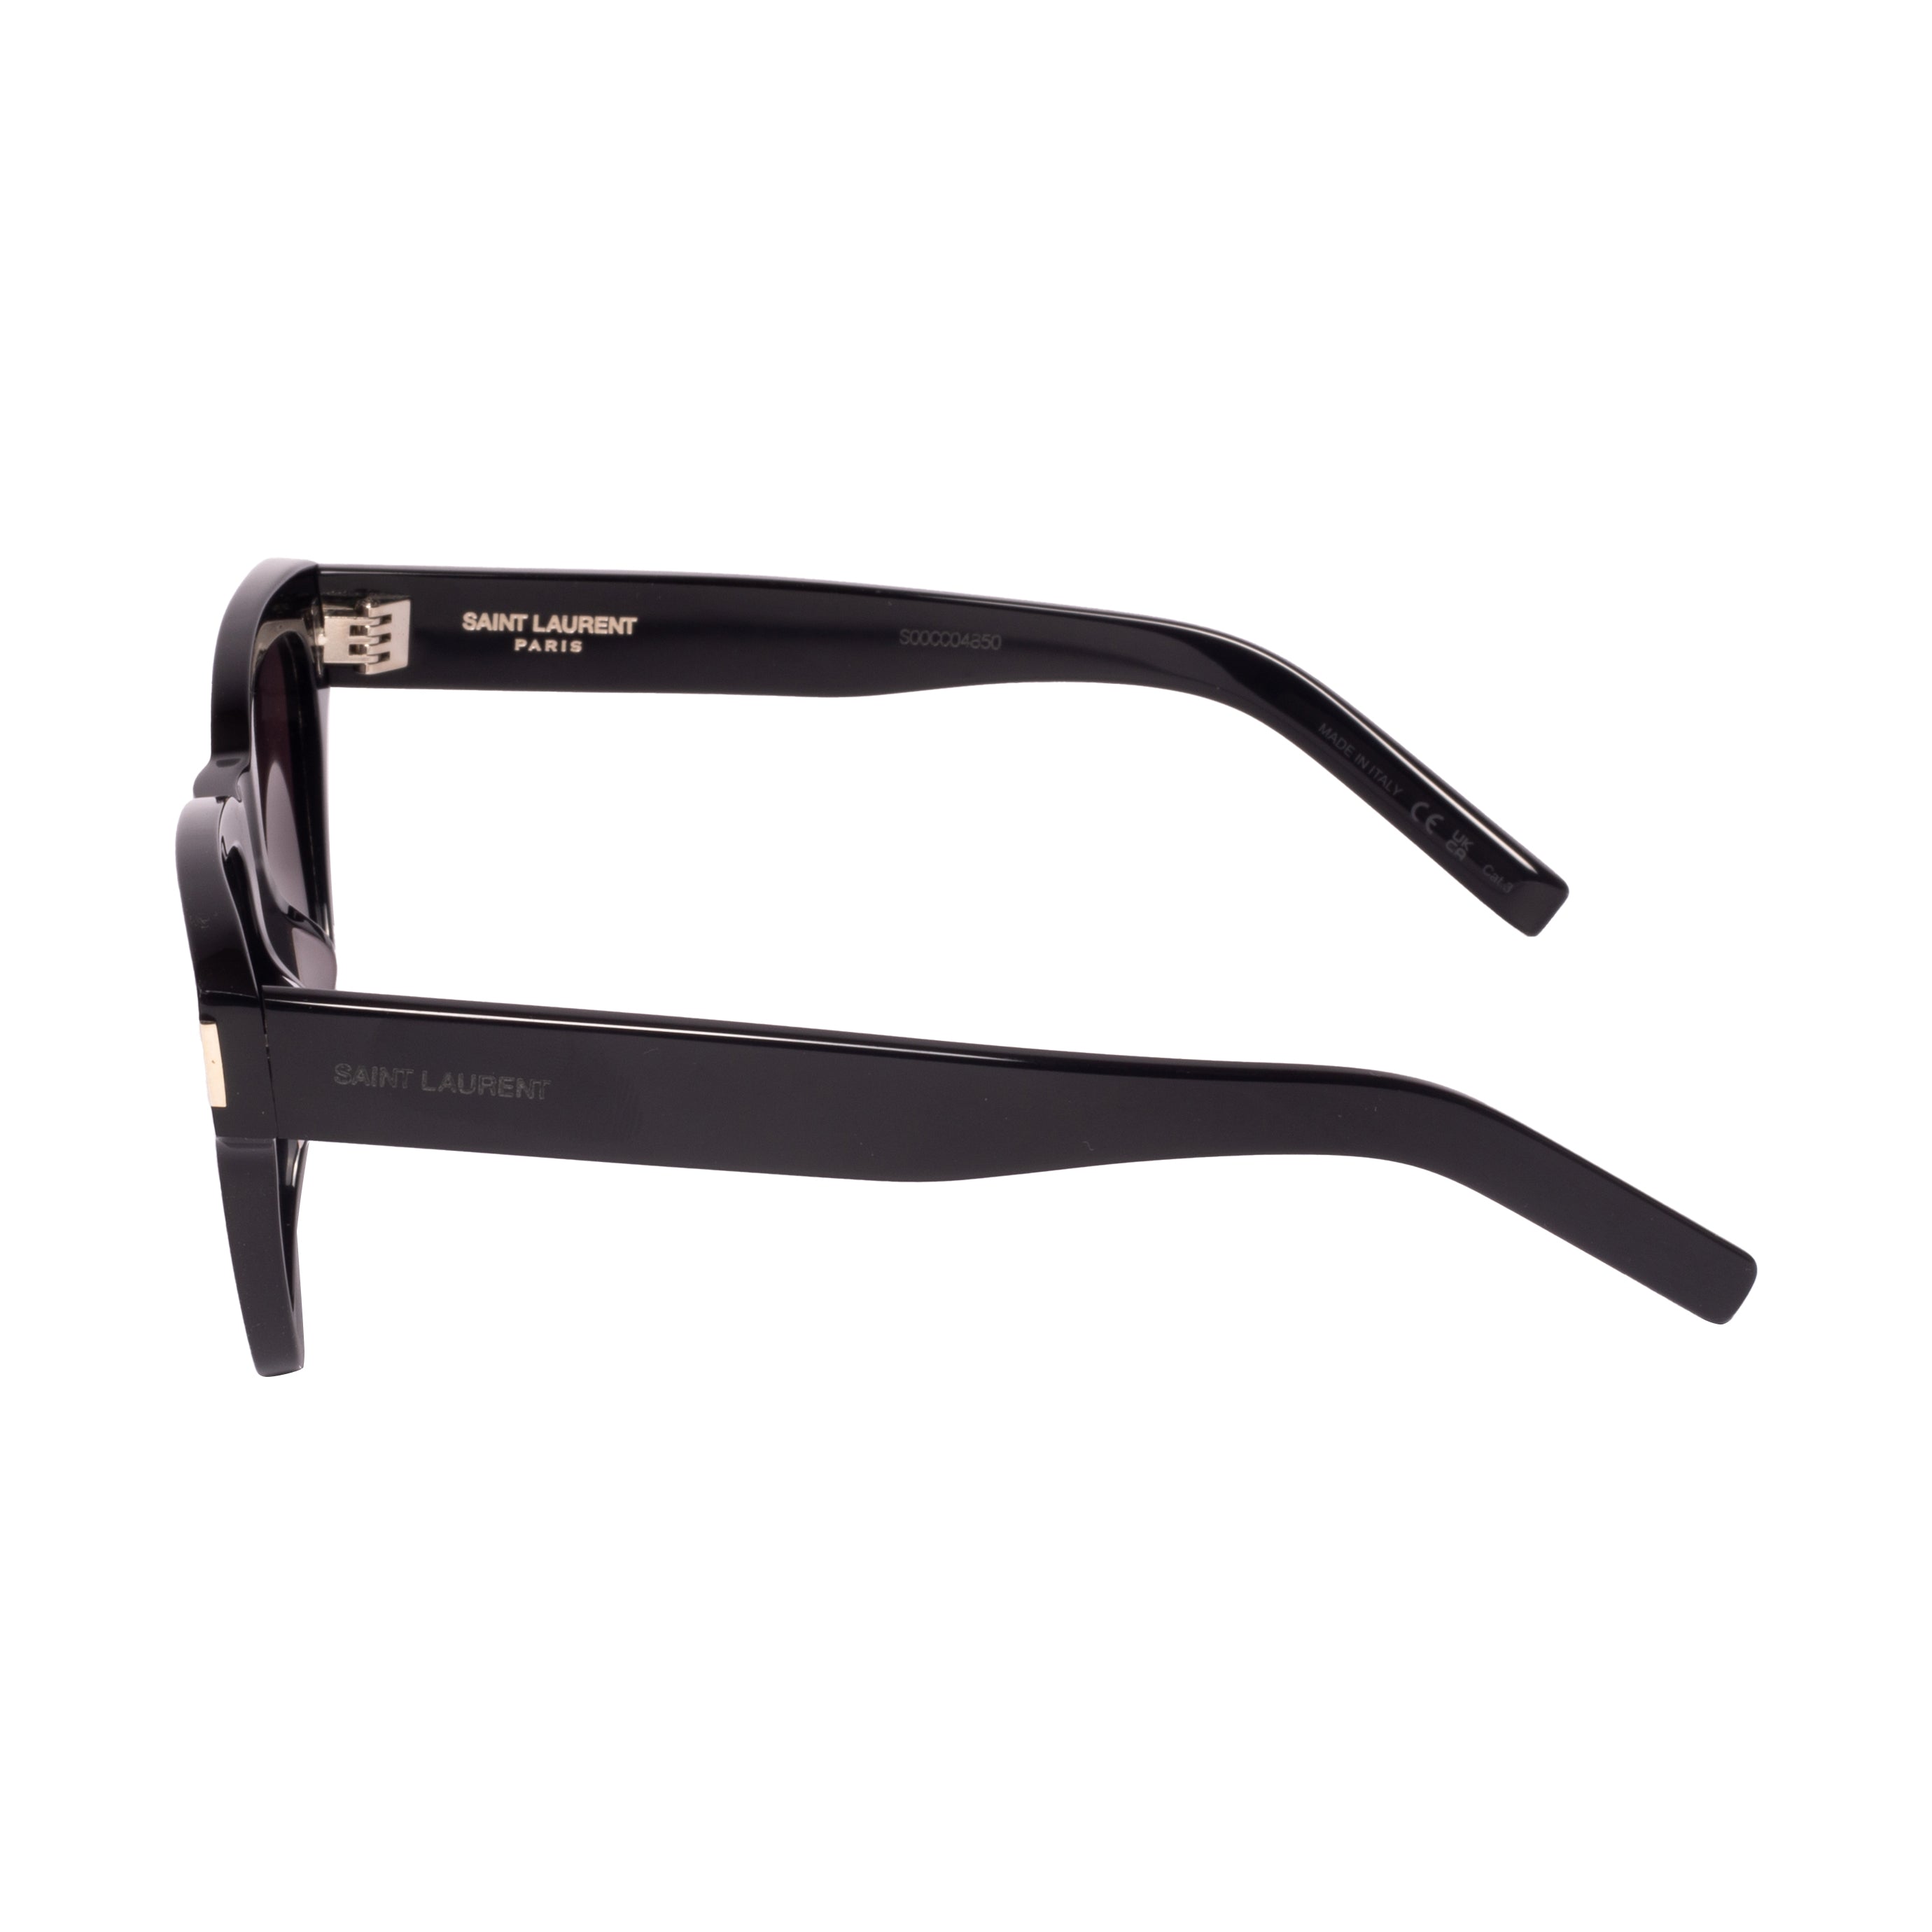 Saint Laurent-SL 560-54-001 Sunglasses - Premium Sunglasses from Saint Laurent - Just Rs. 26400! Shop now at Laxmi Opticians